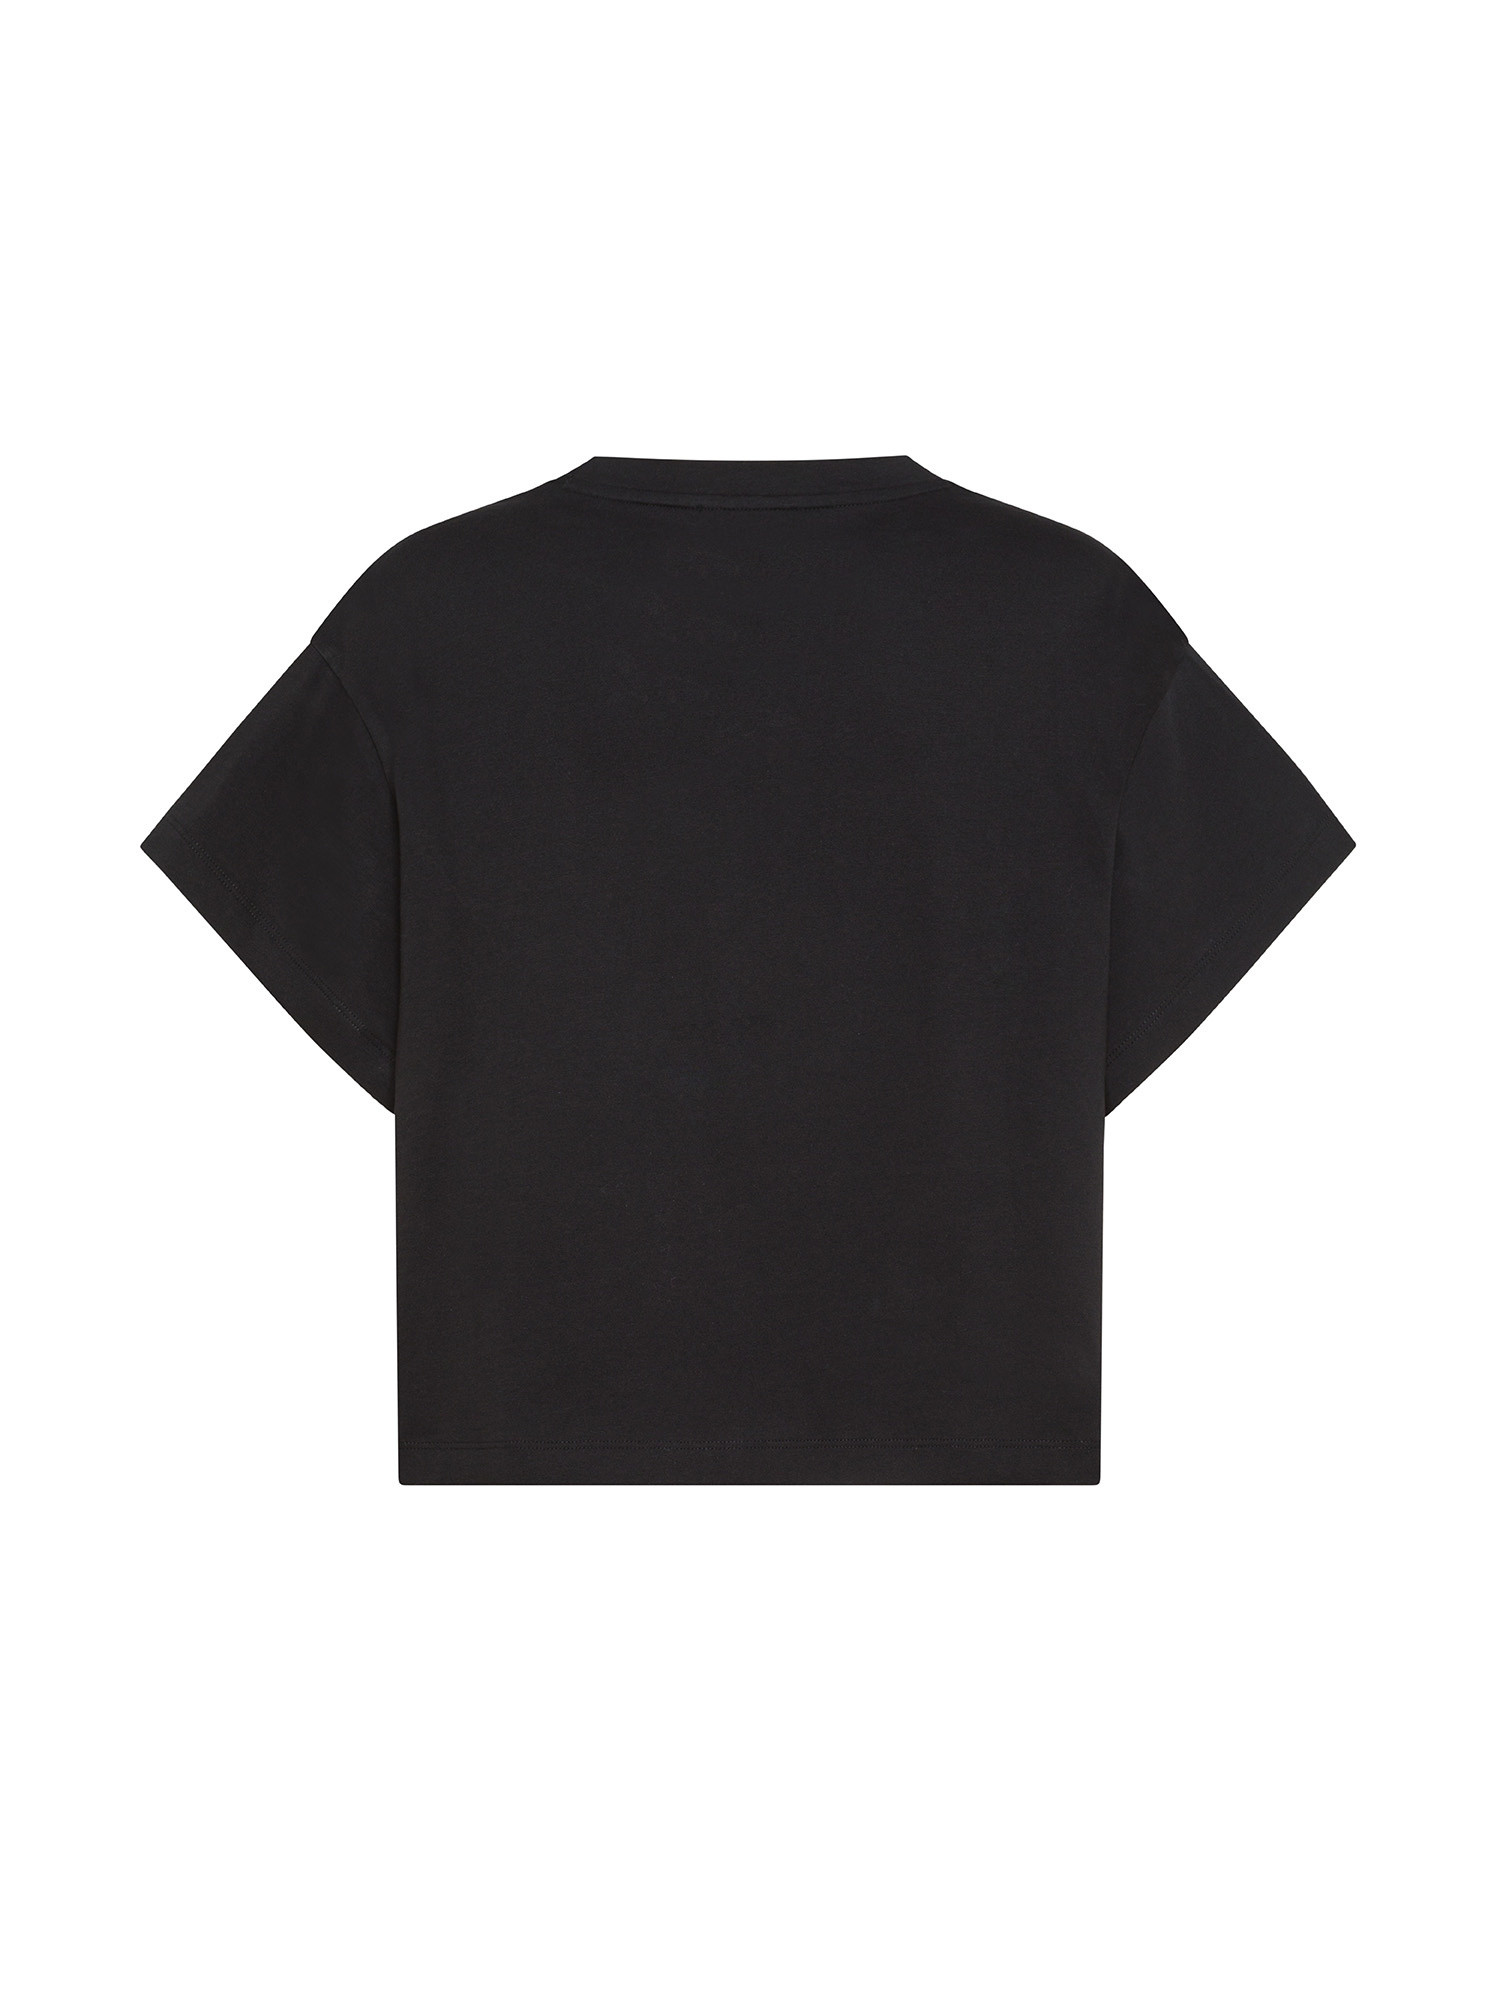 Emporio Armani - T-shirt in cotone con patch logo aquila, Nero, large image number 1